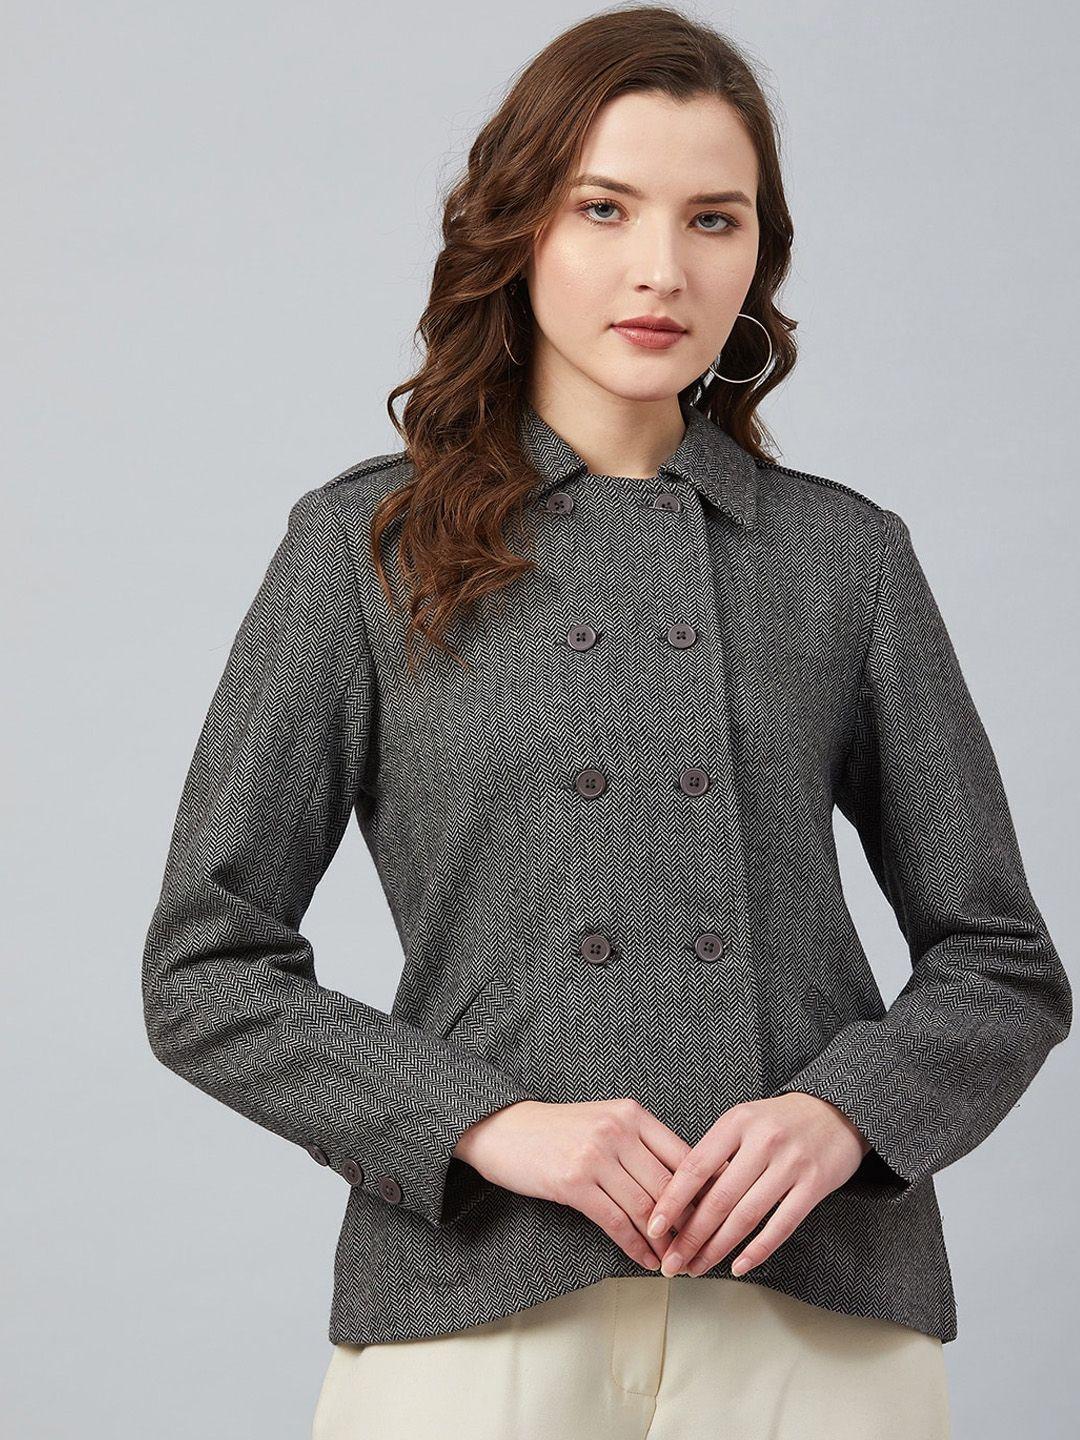 marie claire women charcoal self design woollen tailored jacket